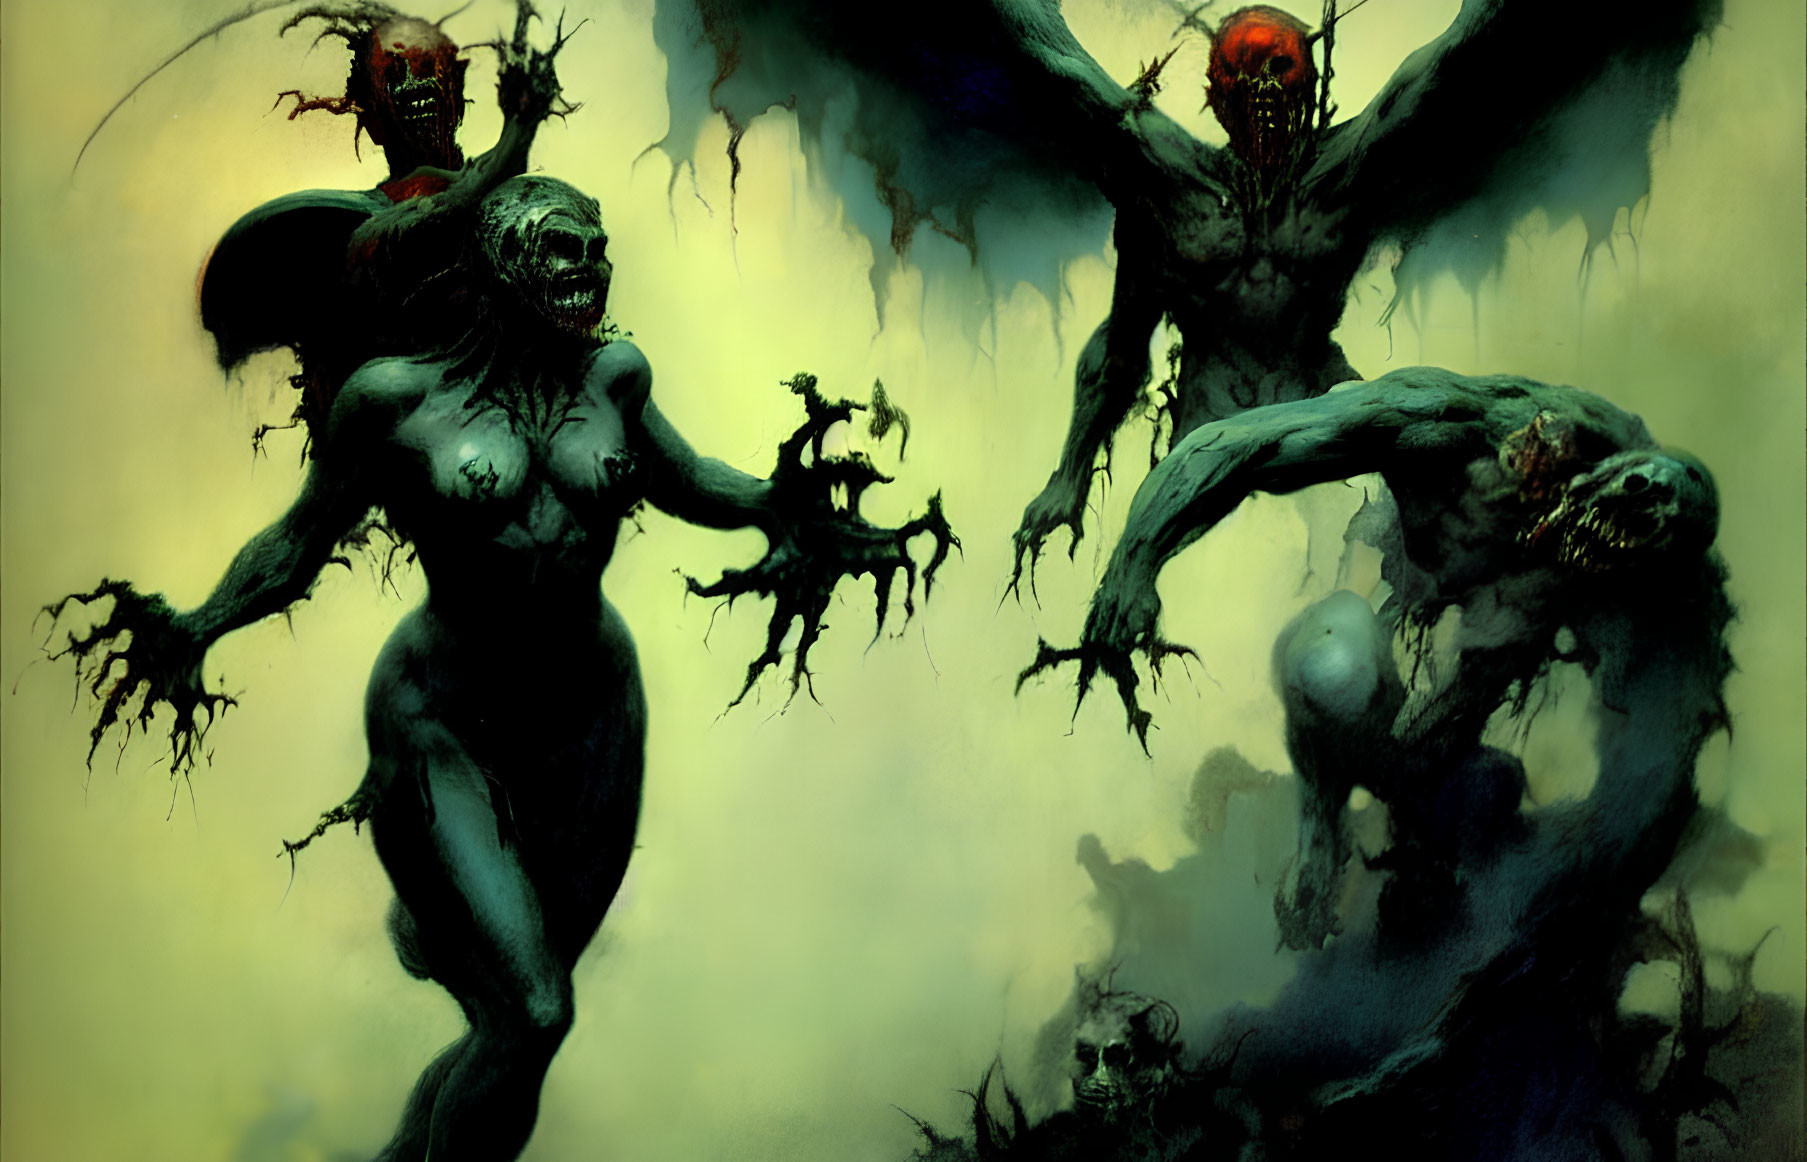 Dark fantasy artwork: Three menacing winged creatures with glowing red eyes in misty green background